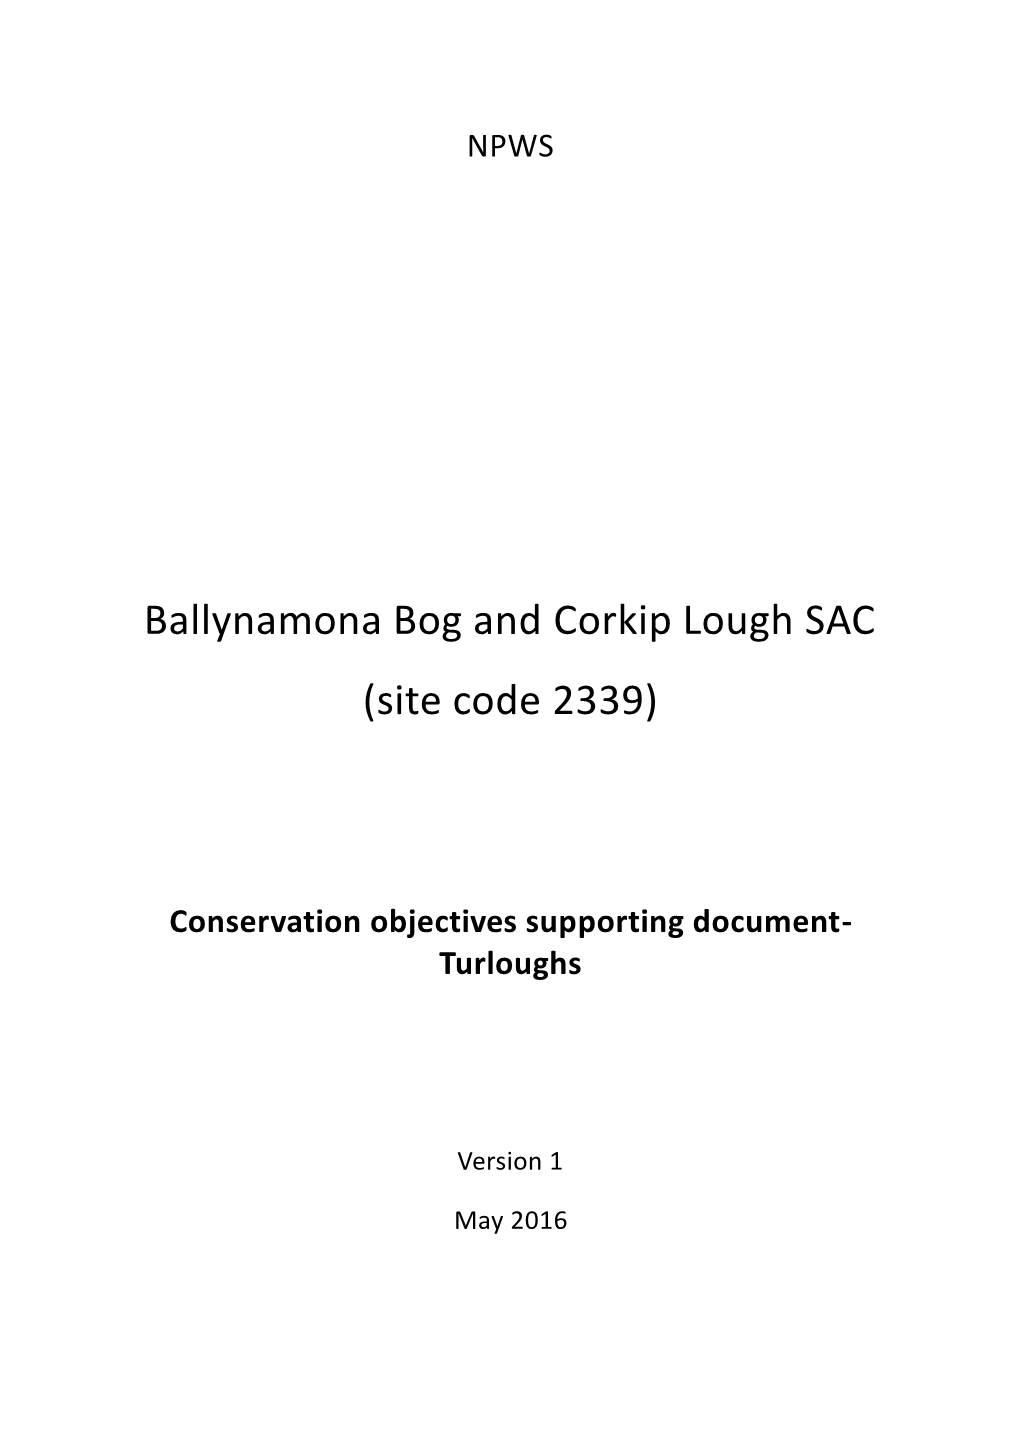 Ballynamona Bog and Corkip Lough SAC (Site Code 2339)